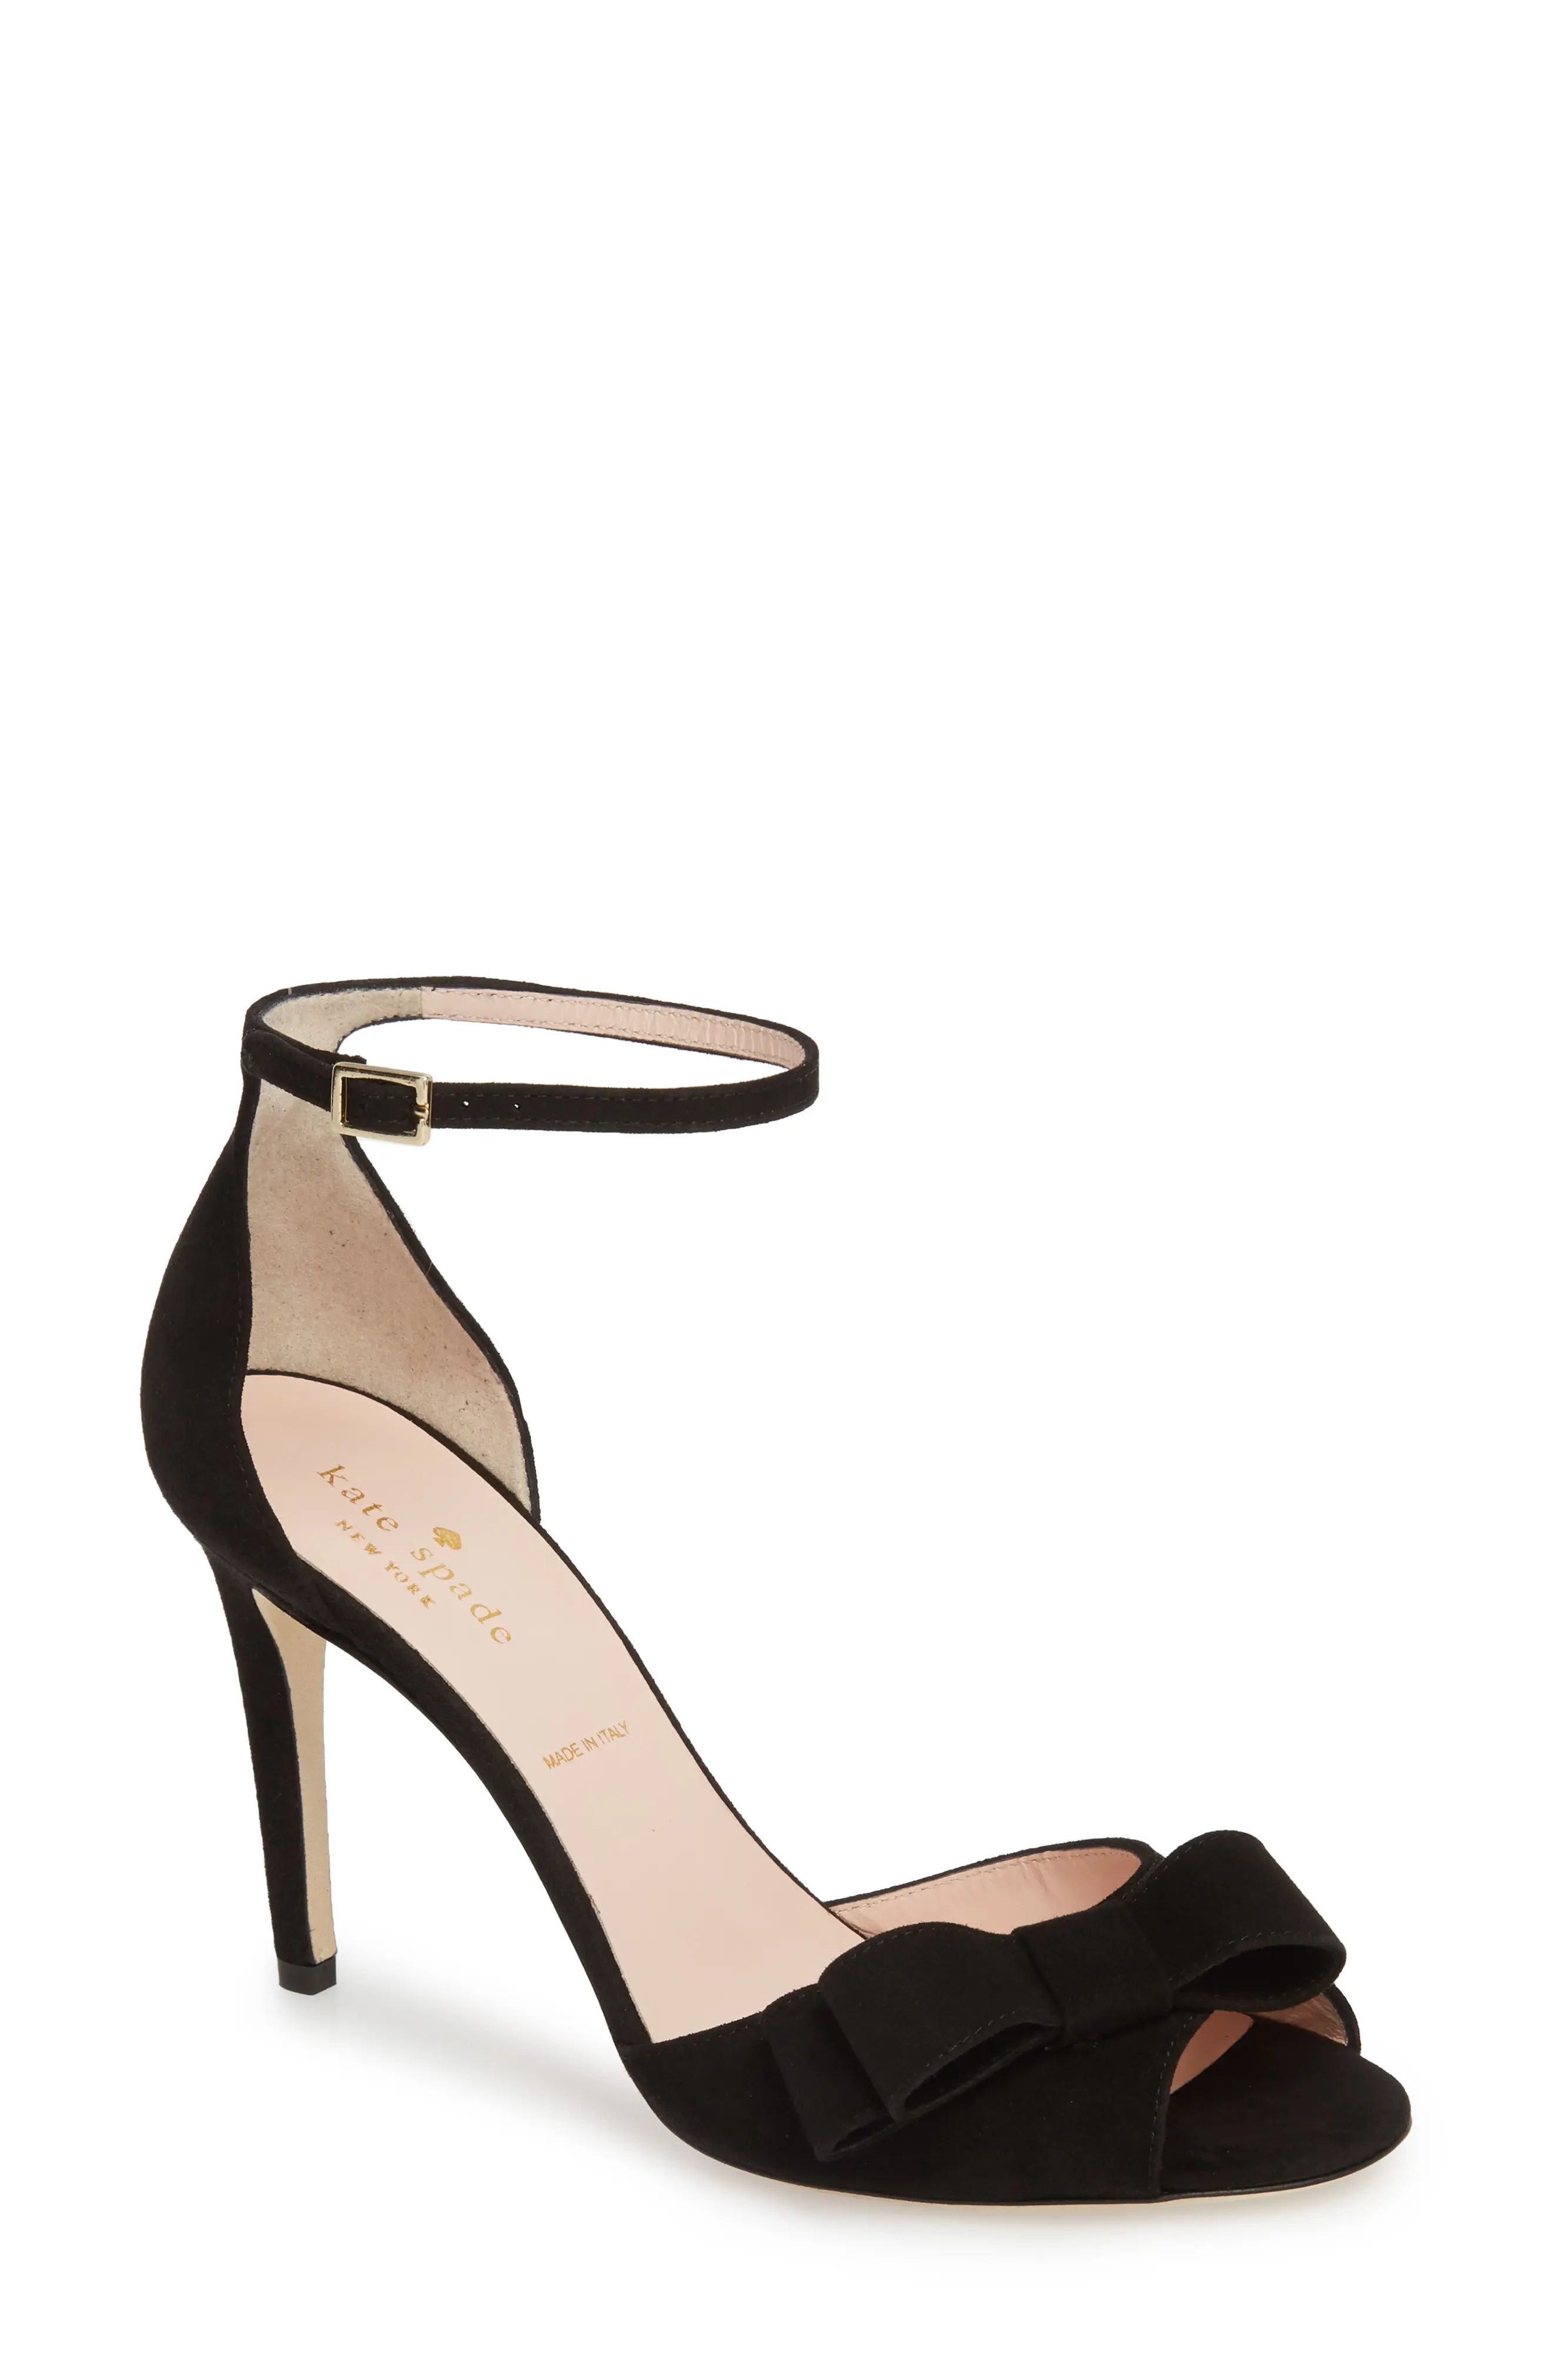 kate spade new york ismay ankle strap sandal (Women) | Nordstrom